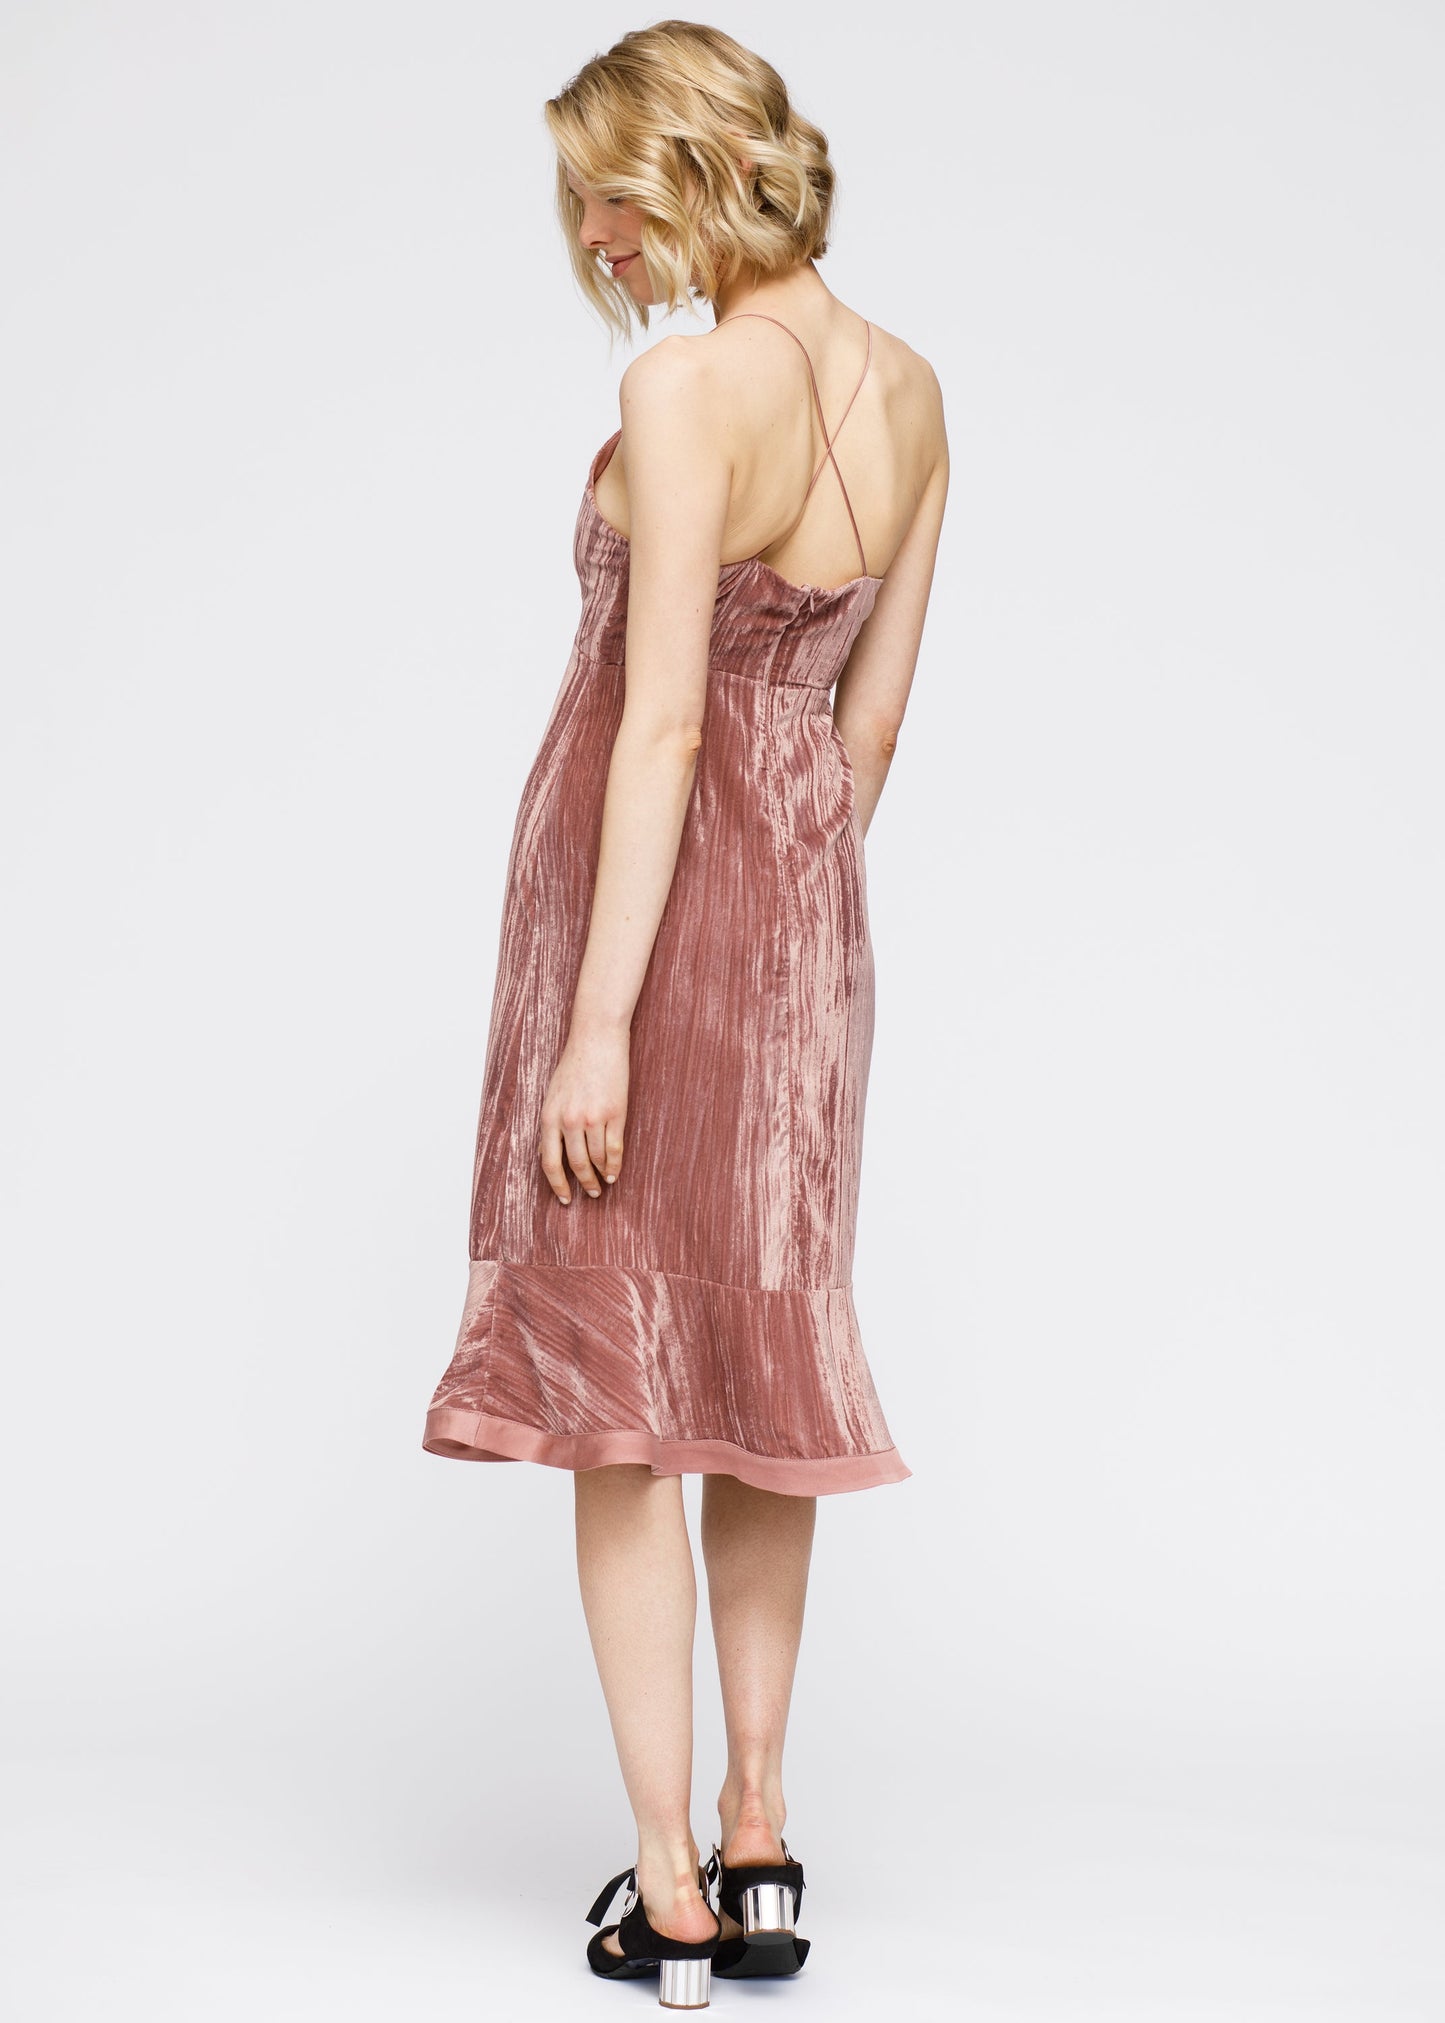 Strap Ruffle Hem Midi Dress' - A midi dress featuring straps and a ruffled hem, creating a stylish and feminine look.